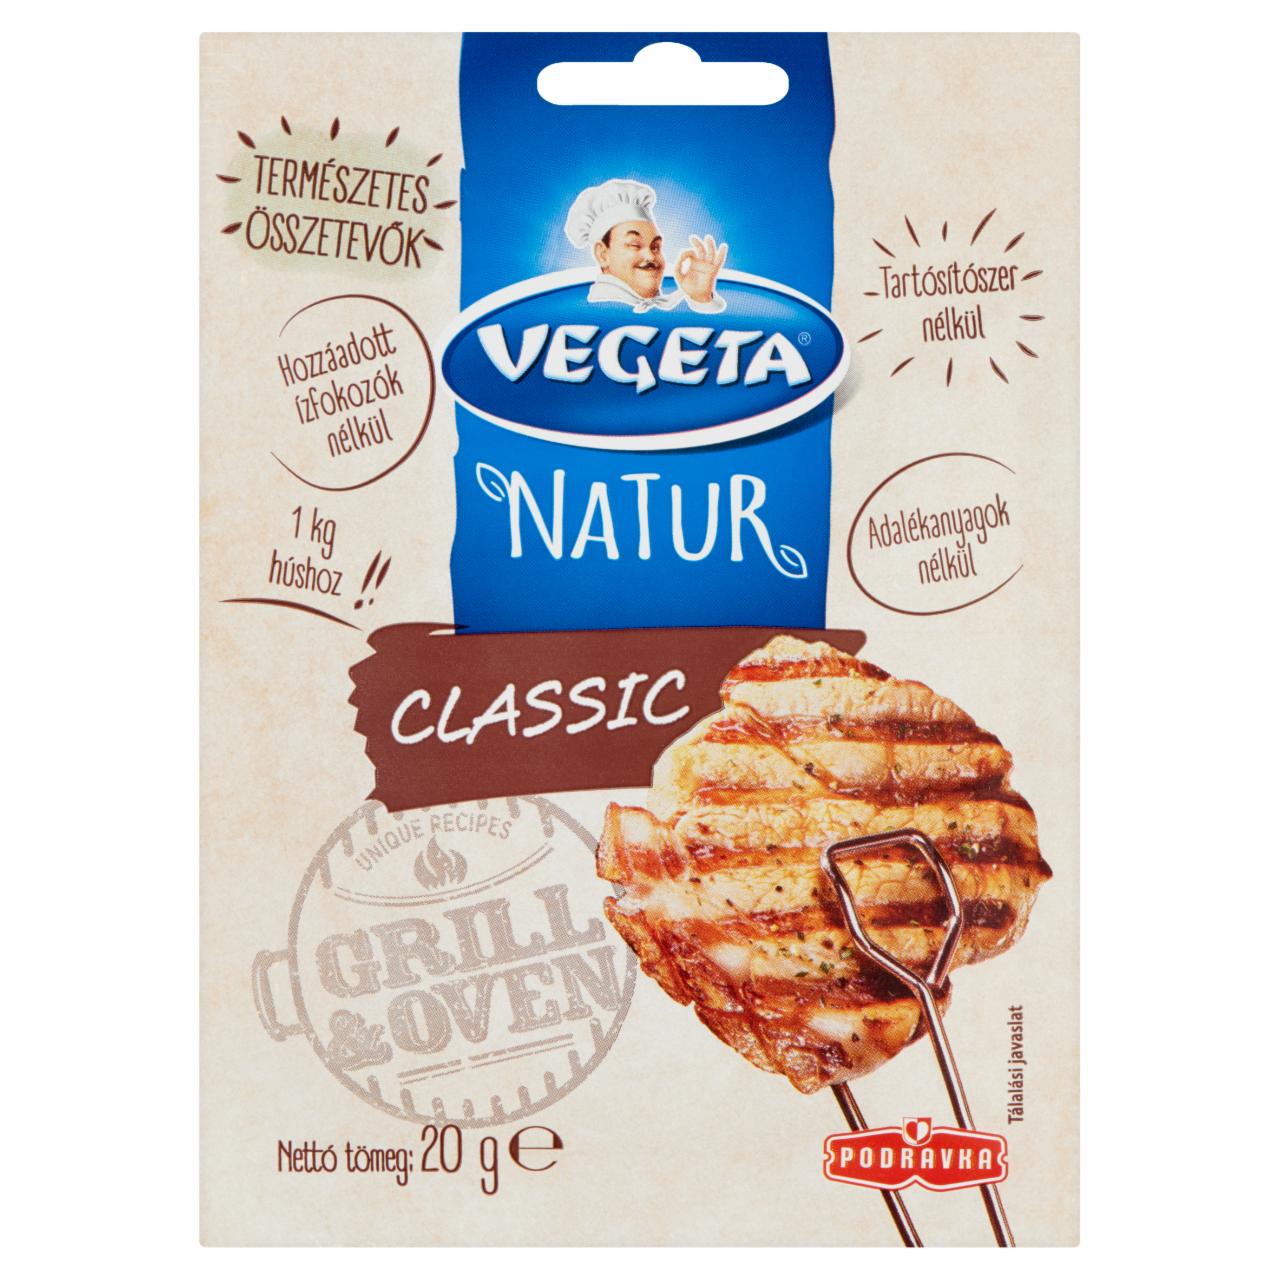 Képek - Vegeta Natur classic grill fűszerkeverék 20 g